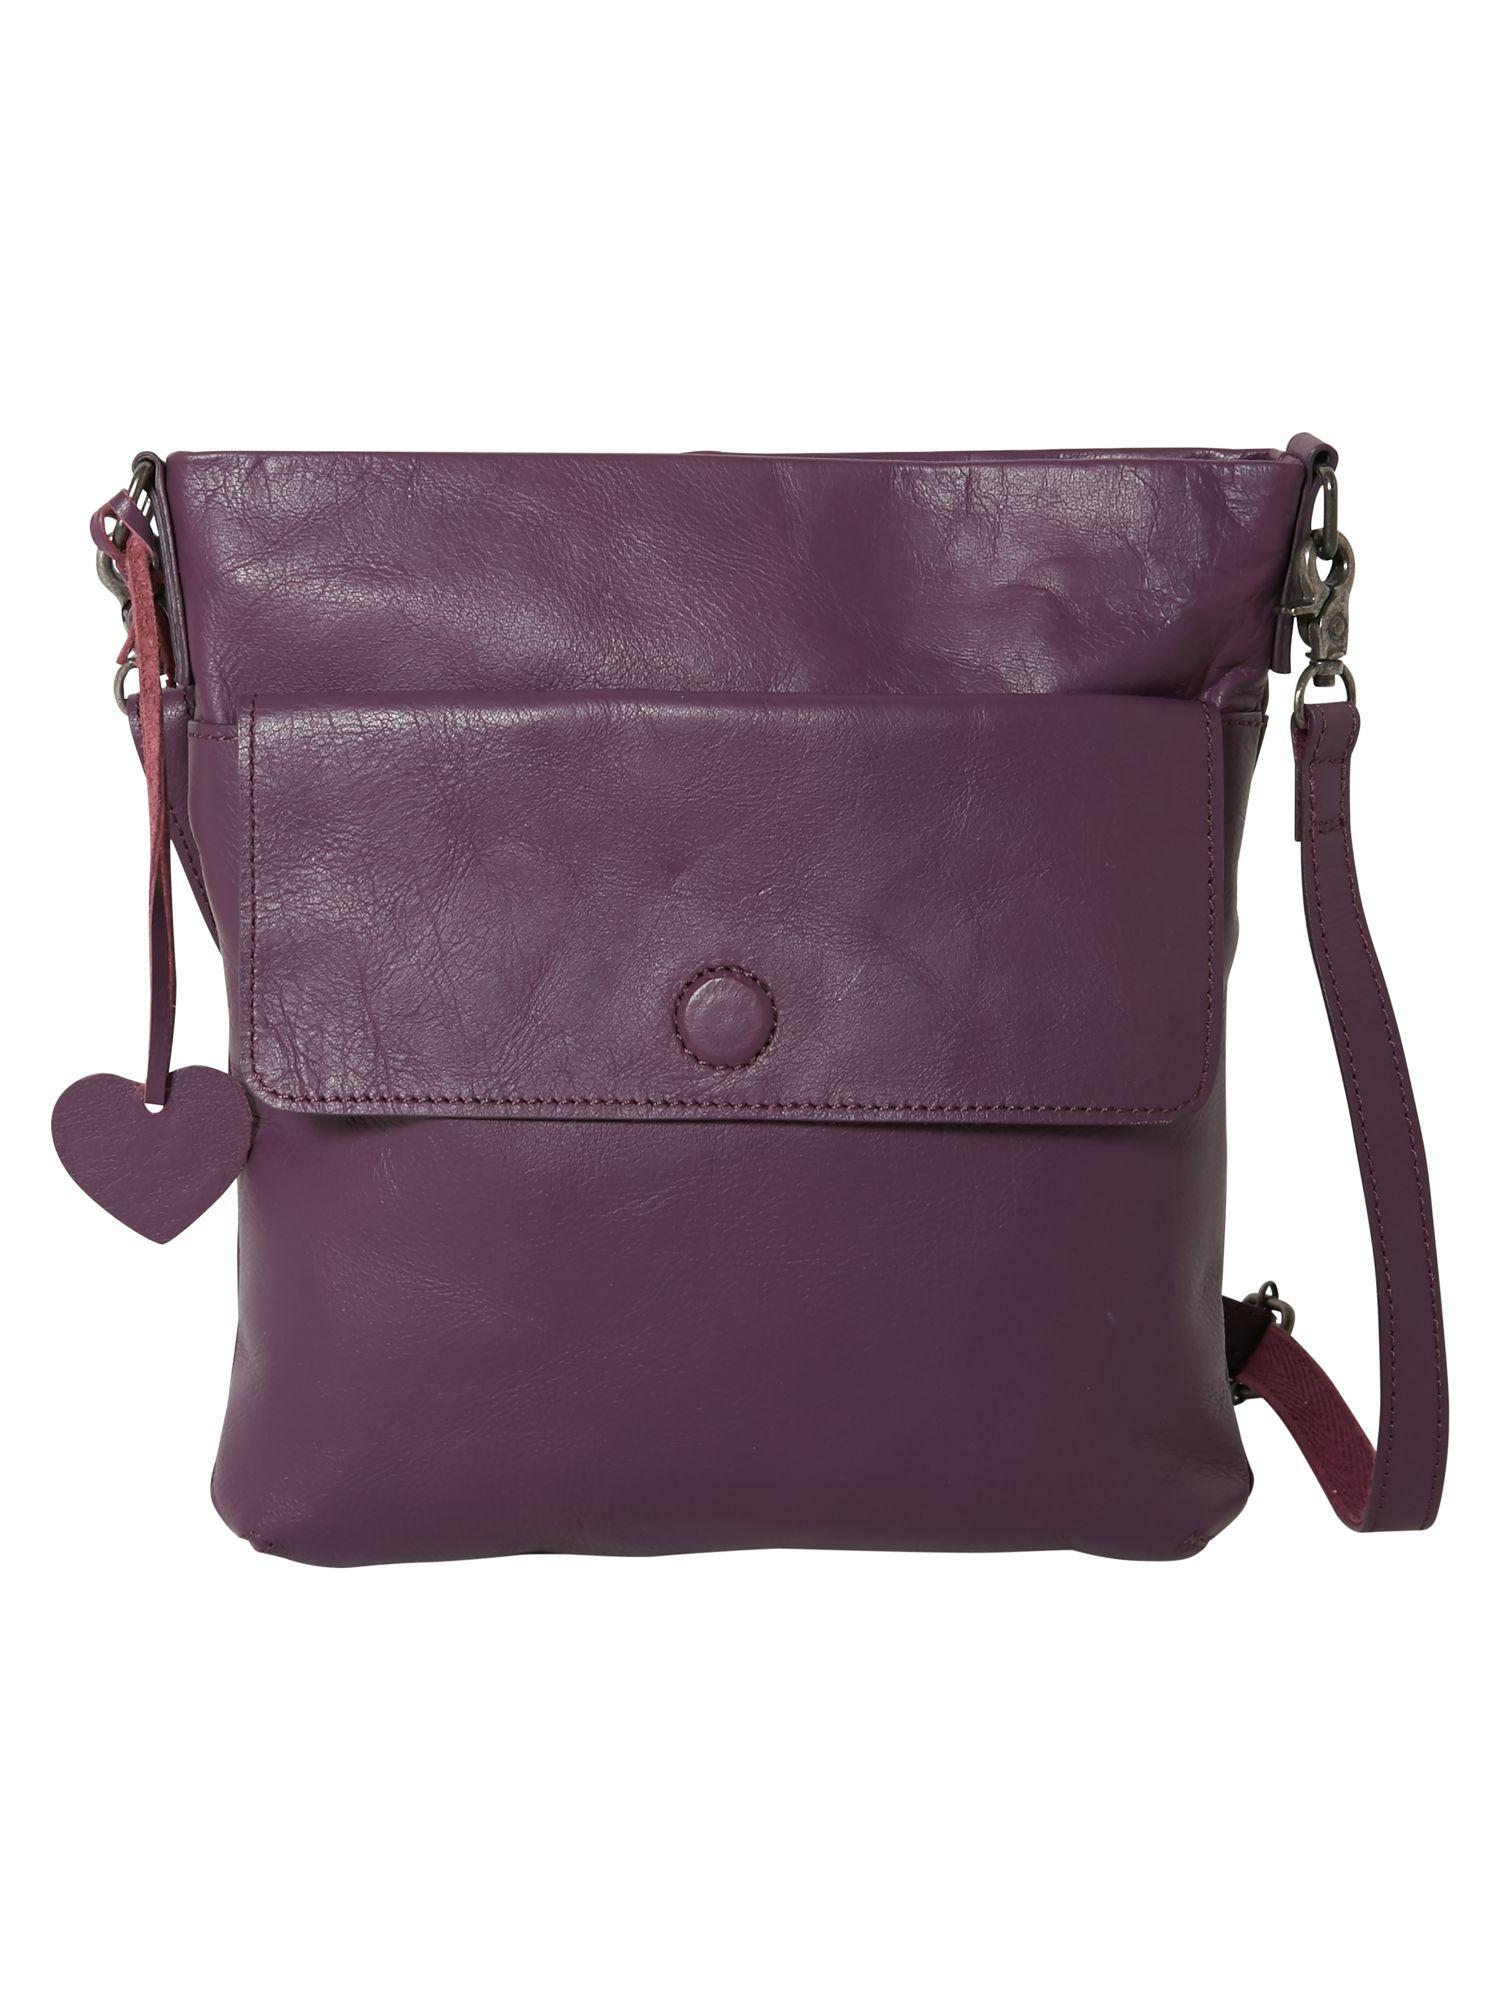 White Stuff Leather Clover Crossbody Bag in Purple - Lyst